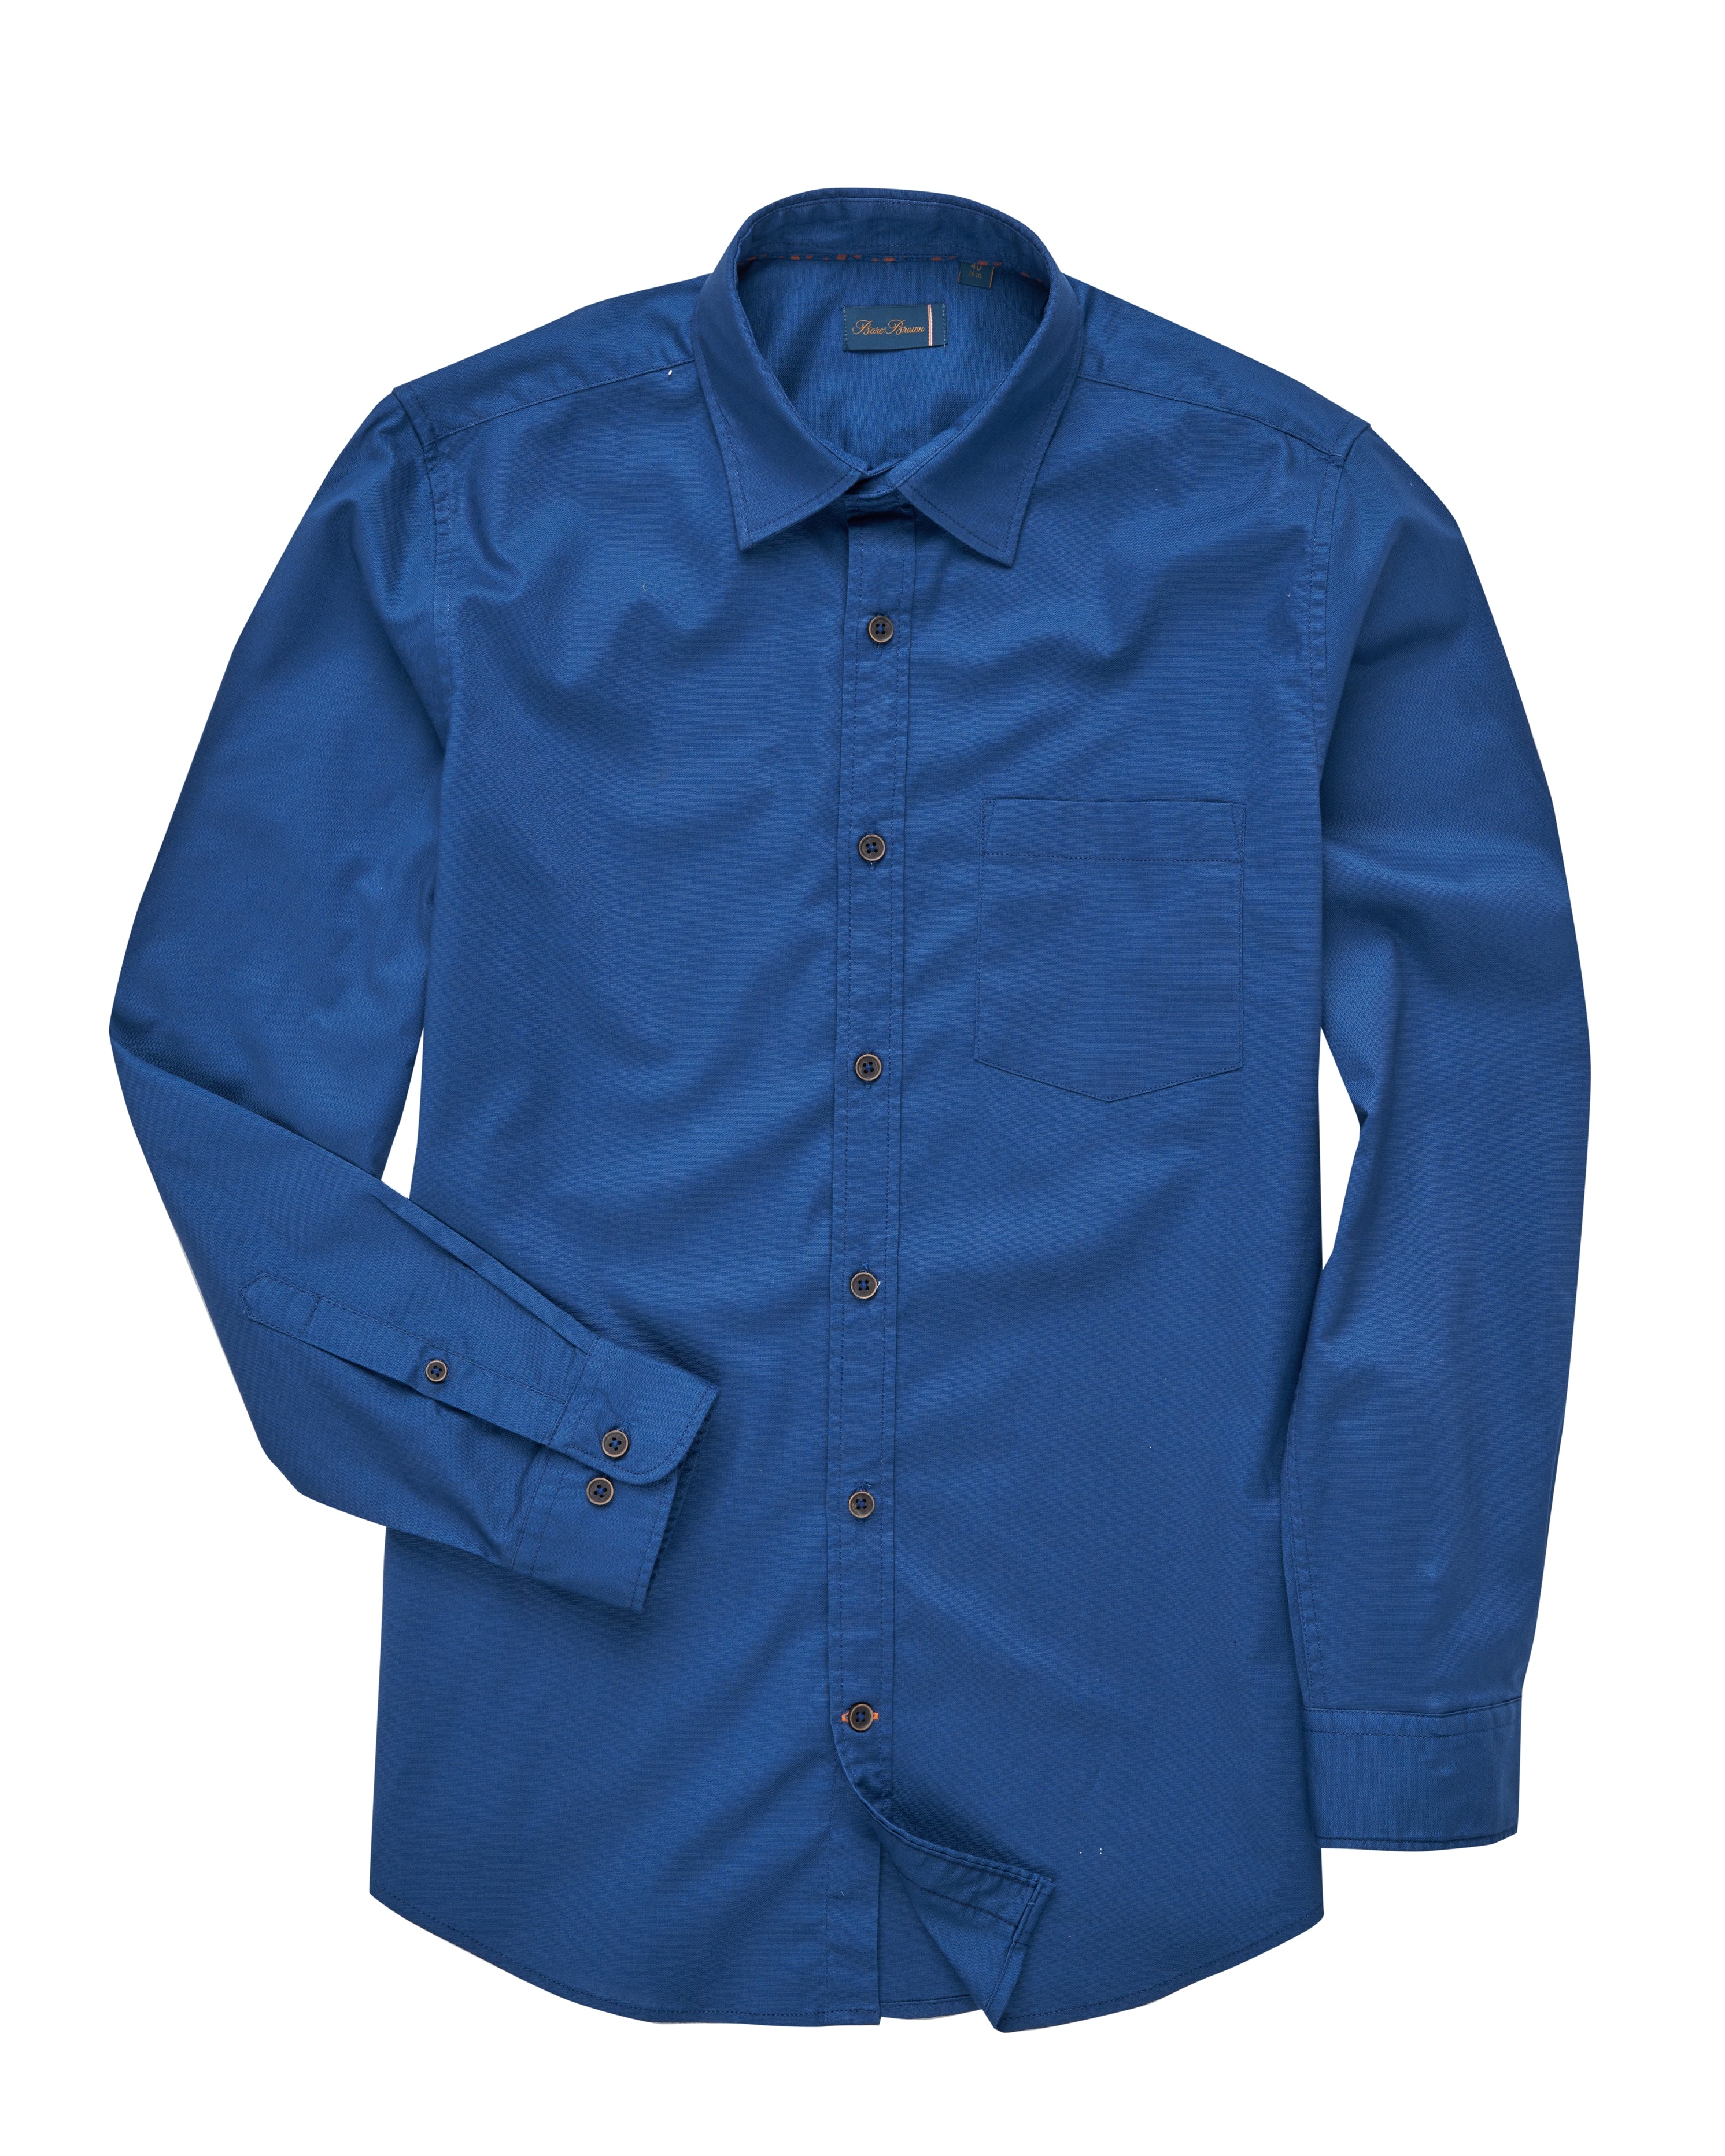 Bare Brown - Navy Blue Stretch Cotton Shirt, Slim Fit